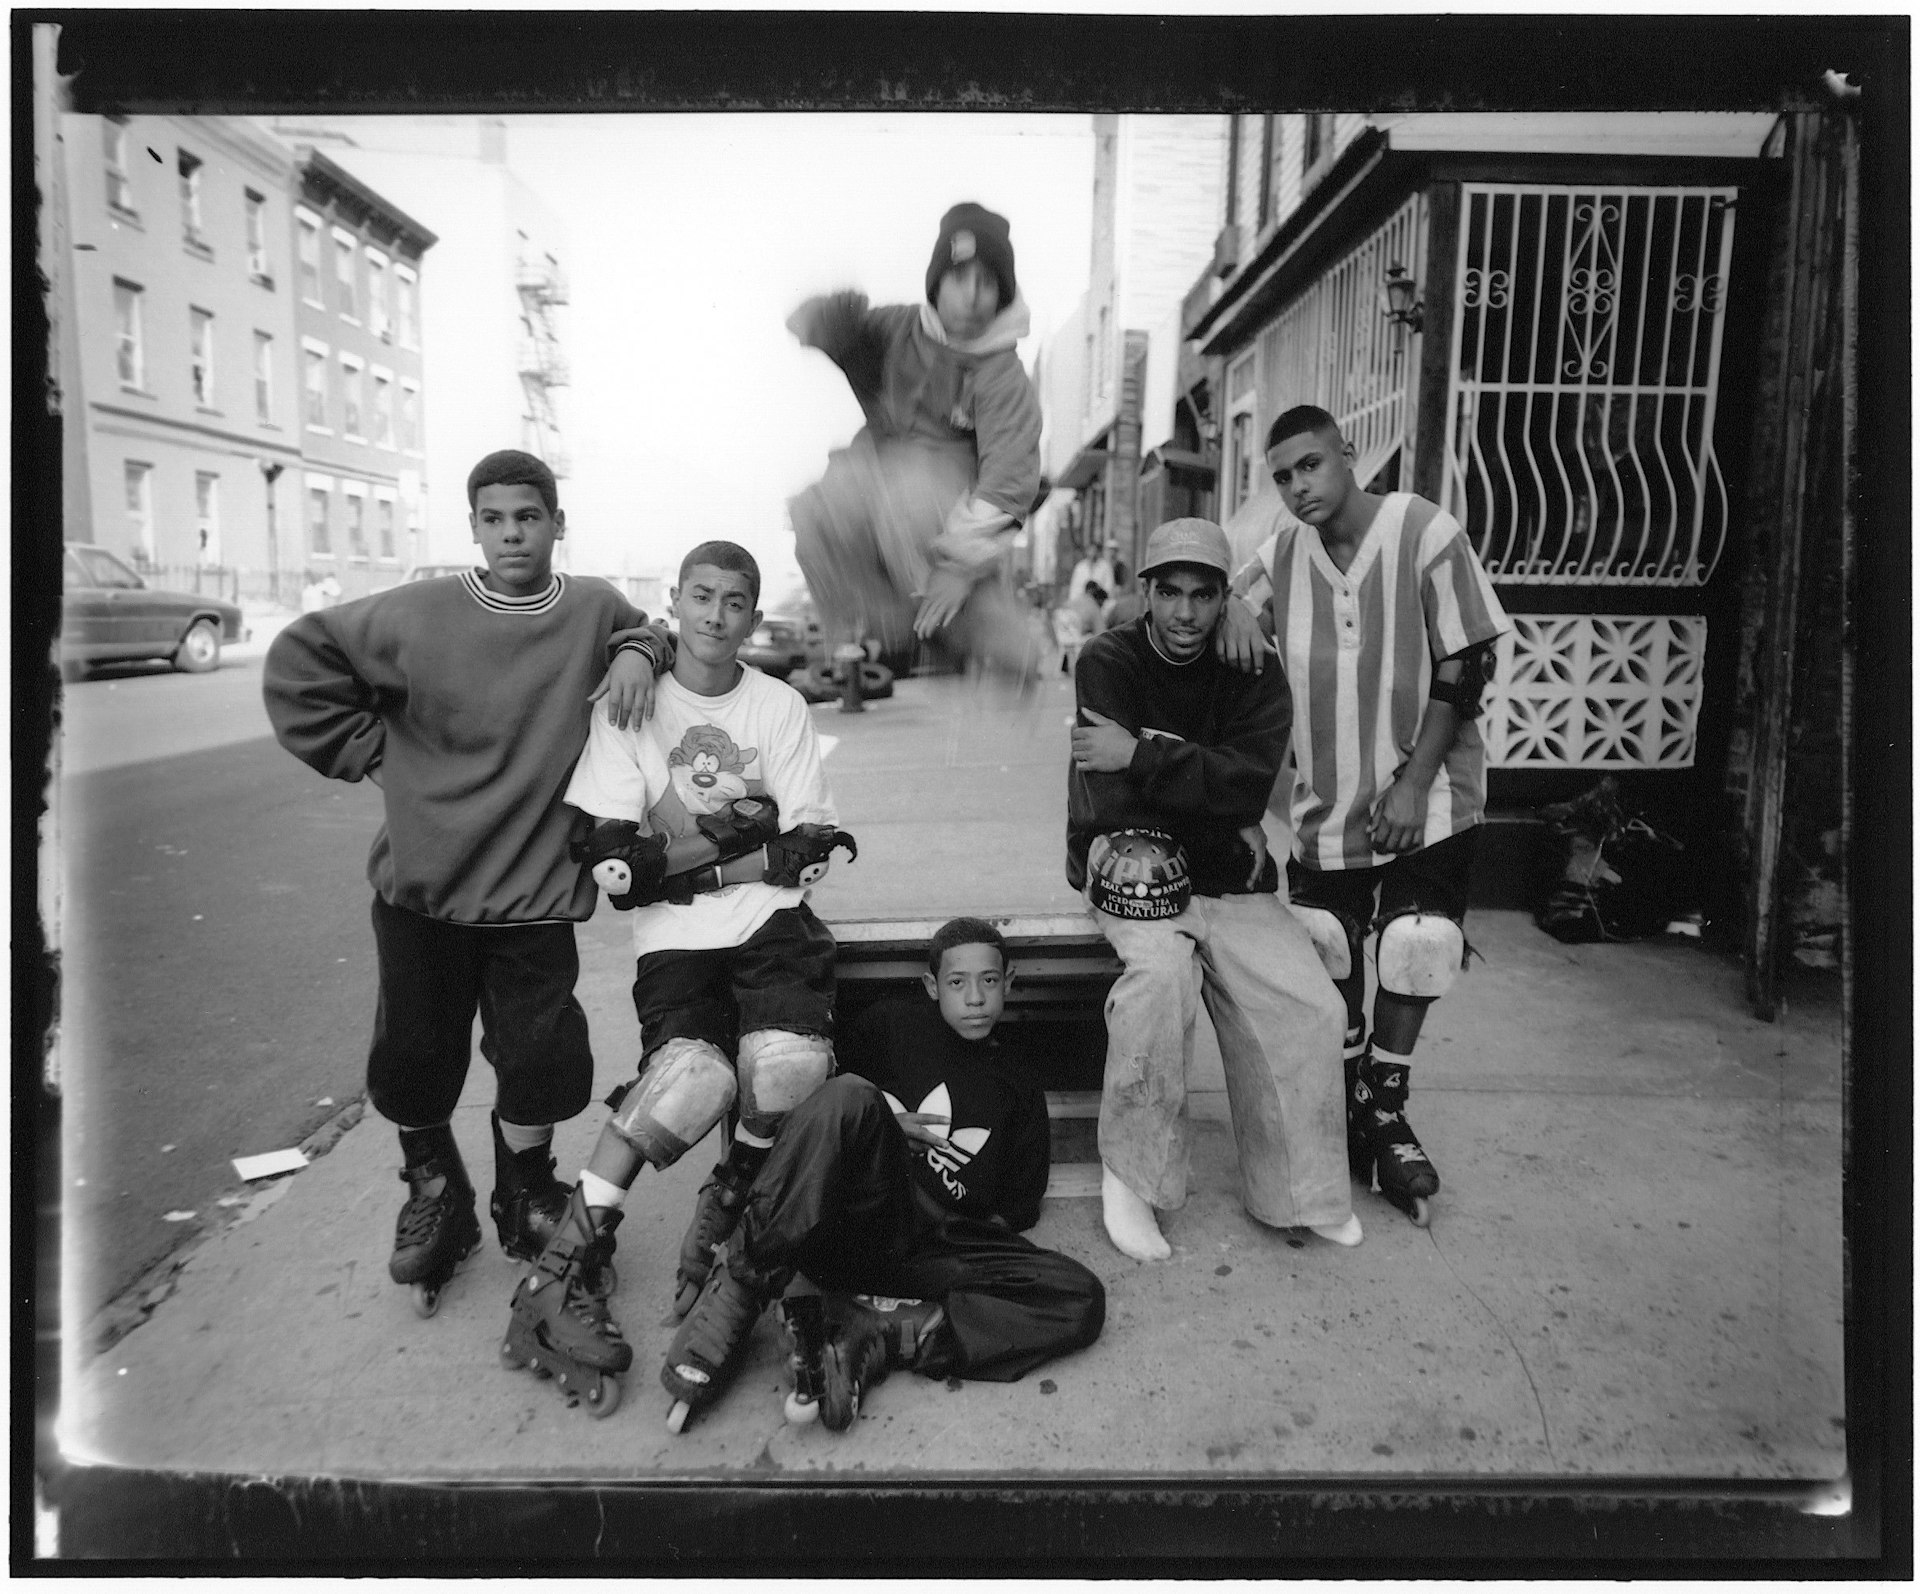 The underground skate scene of ‘90s Brooklyn